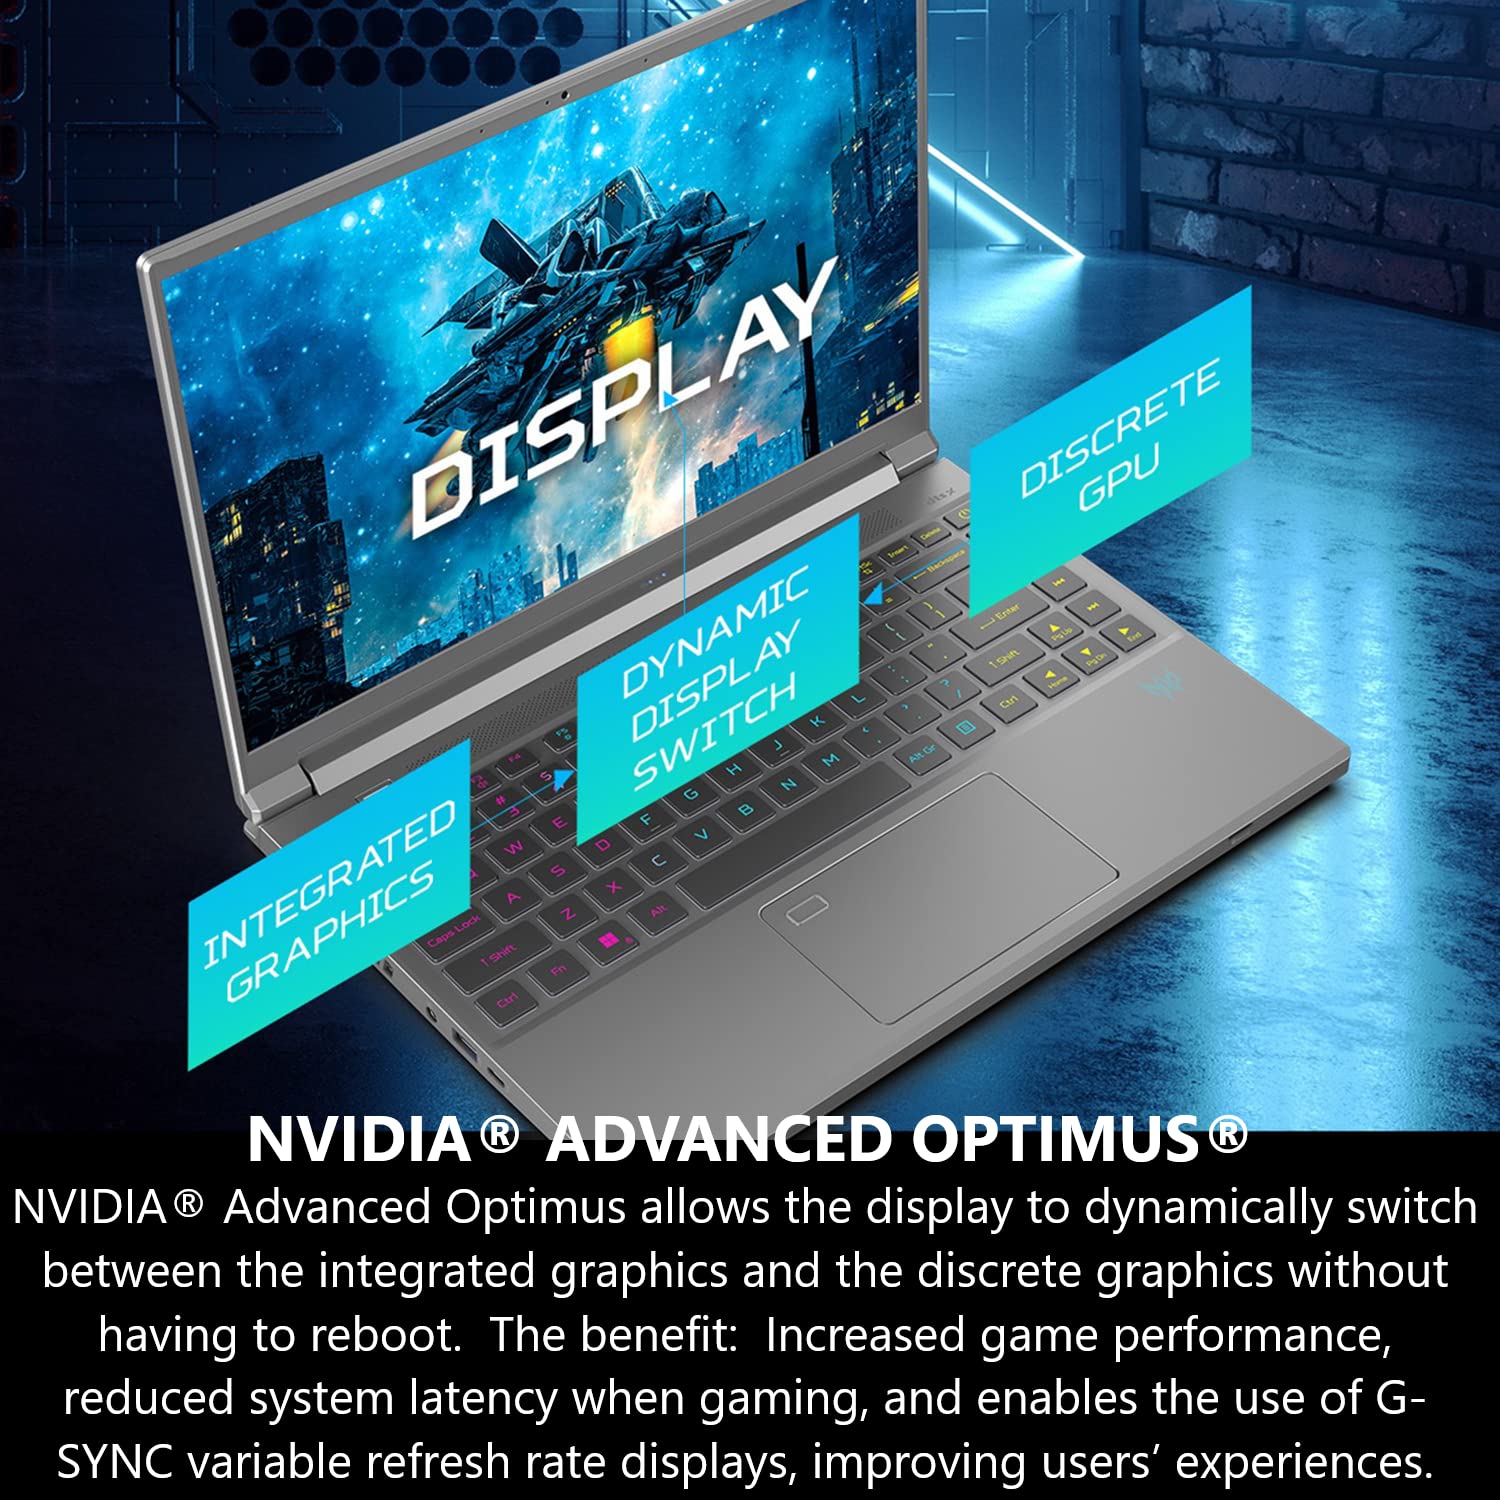 Acer Predator Triton 14 Gaming/Creator Laptop | 13th Gen Intel i7-13700H | NVIDIA GeForce RTX 4070 | 14